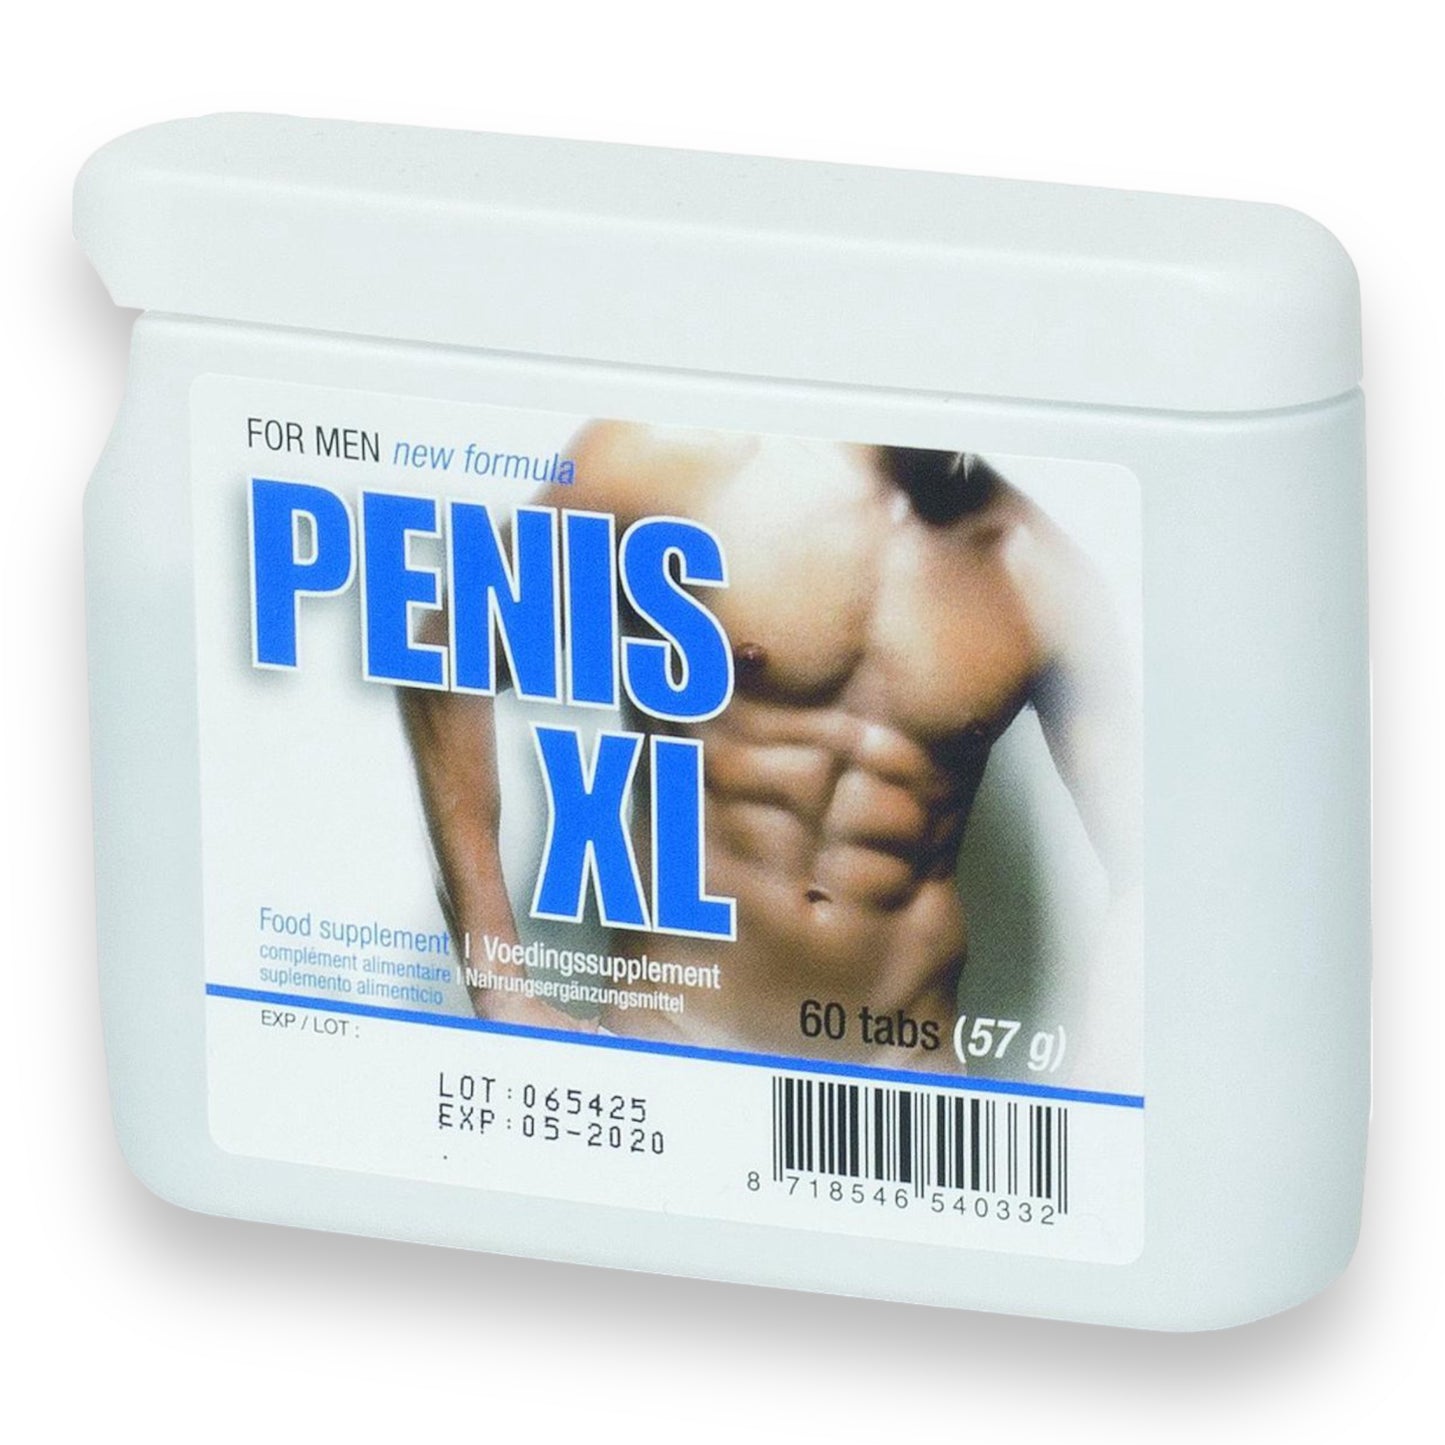 Cobeco Penis XL Erection Pills 60 Caps